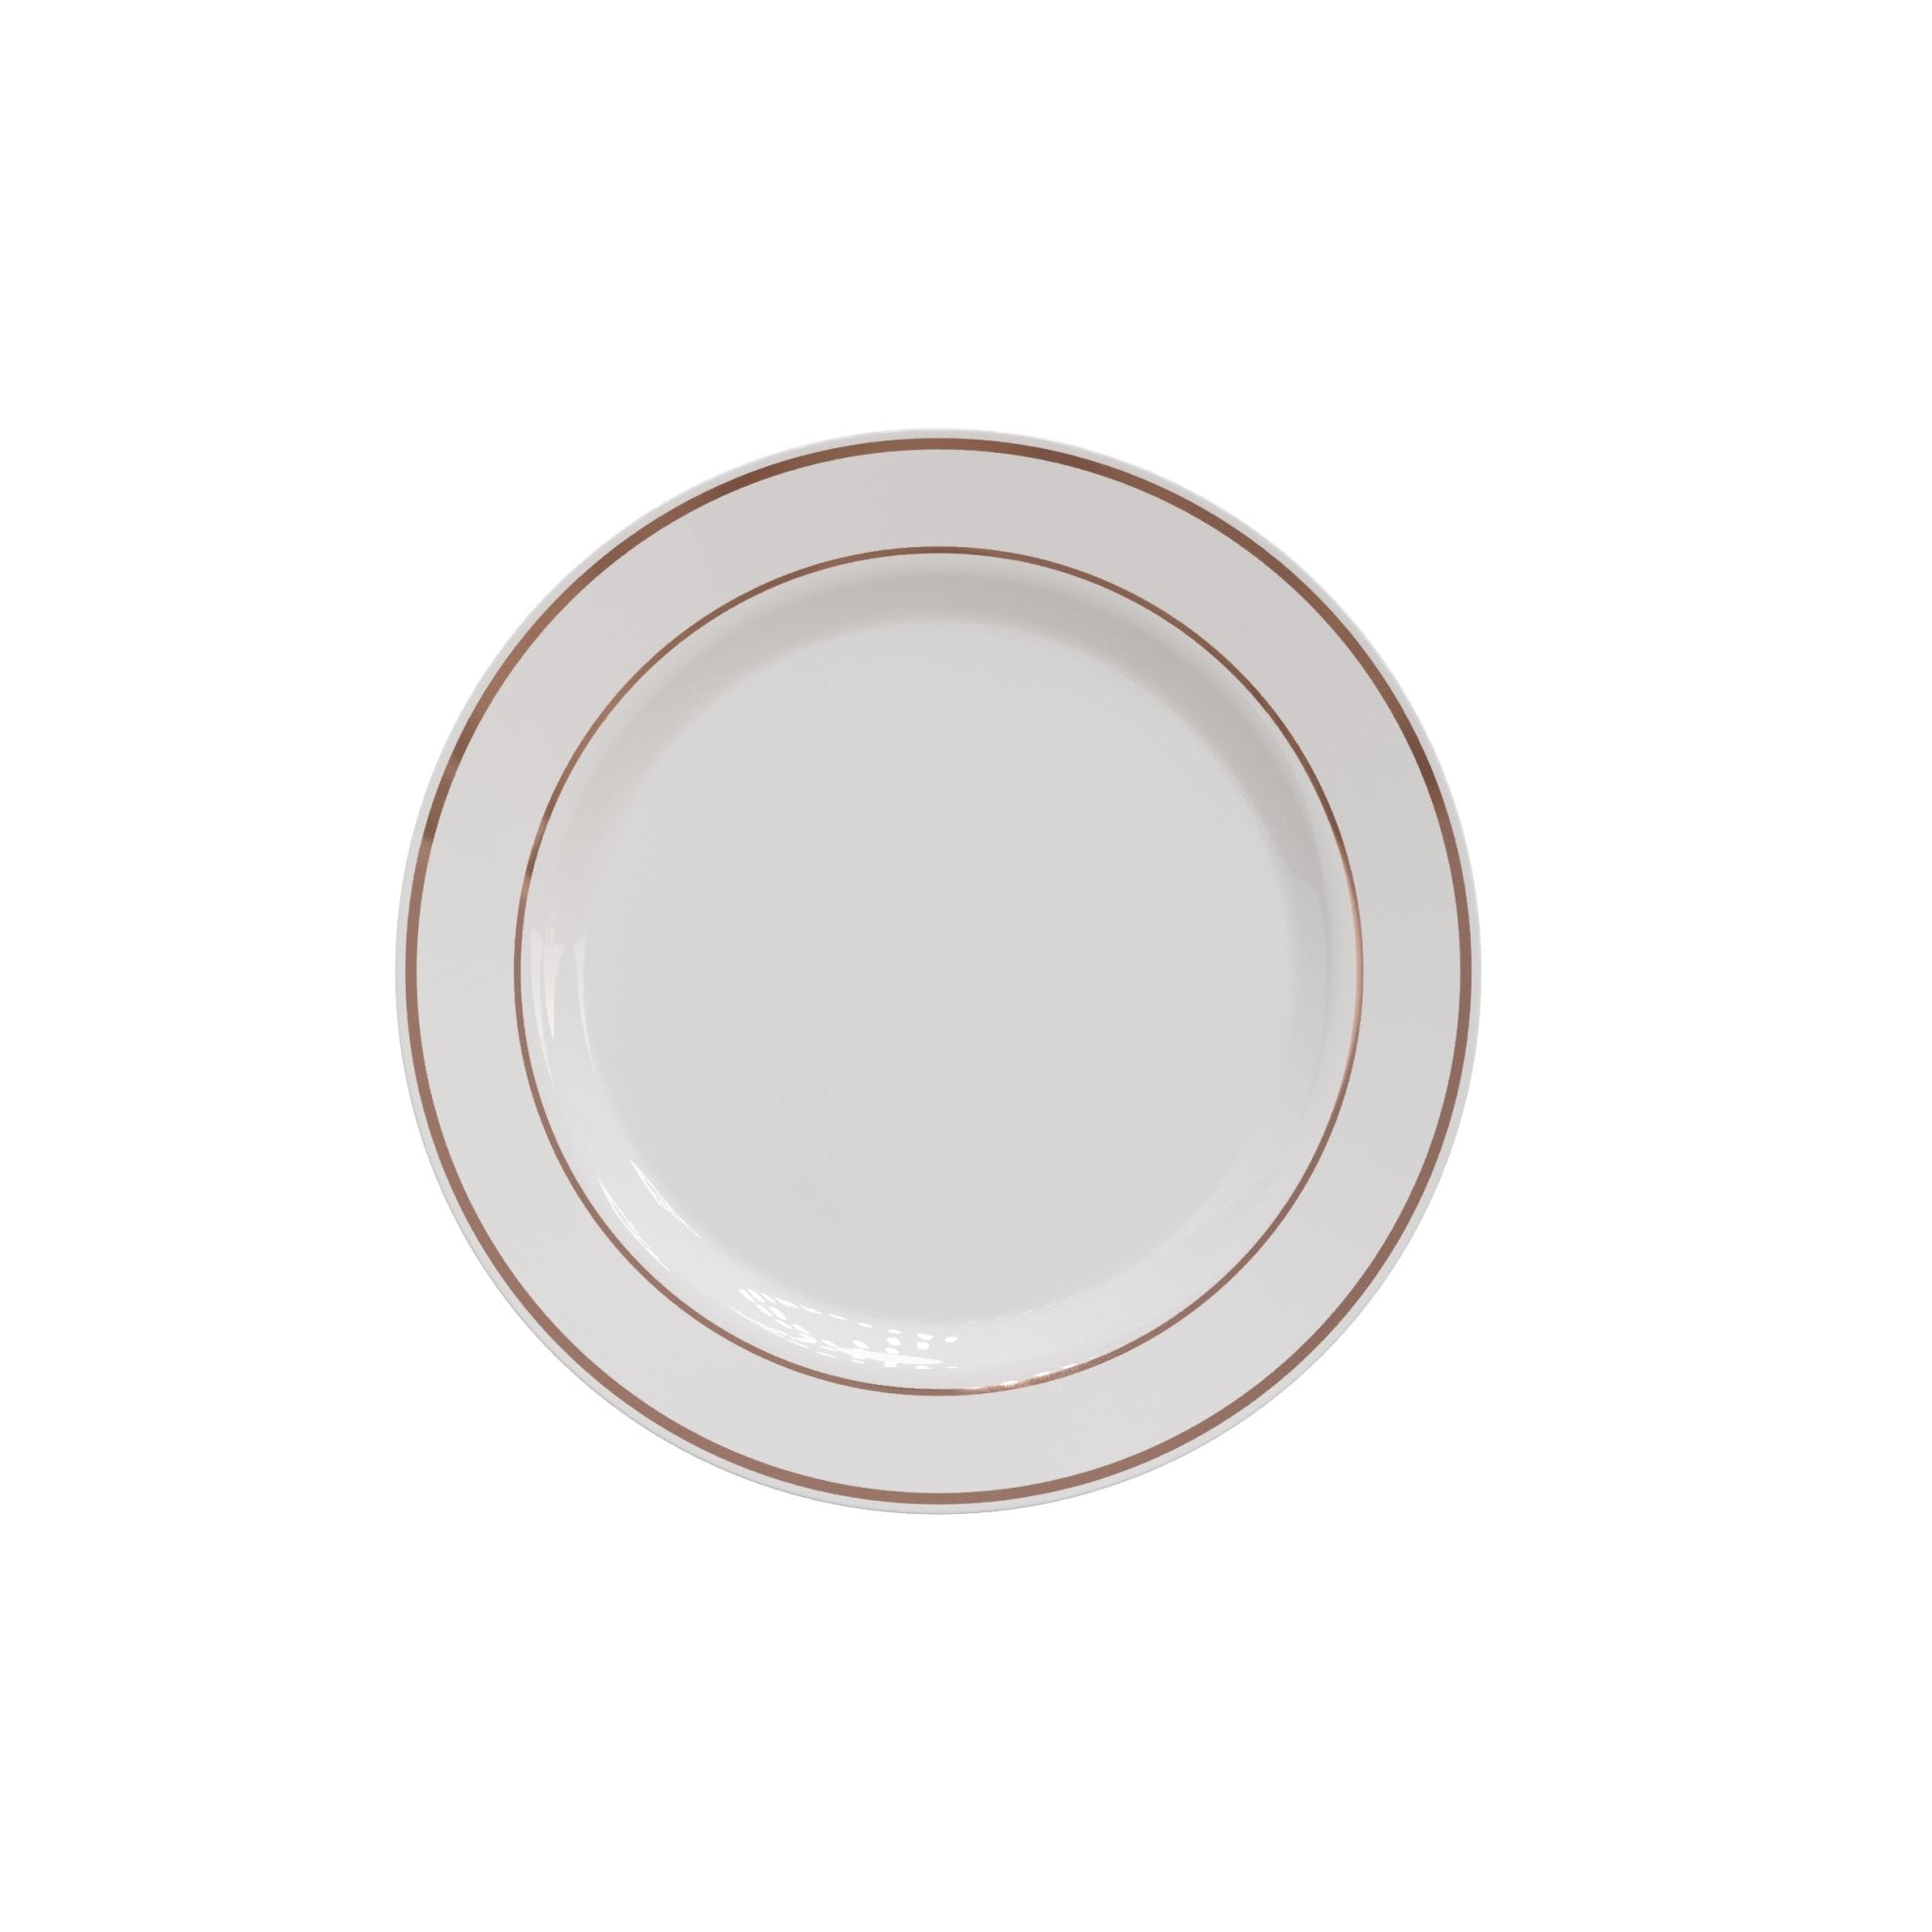 7.5" White/Rose Gold Line Design Plastic Plates (120 Count)